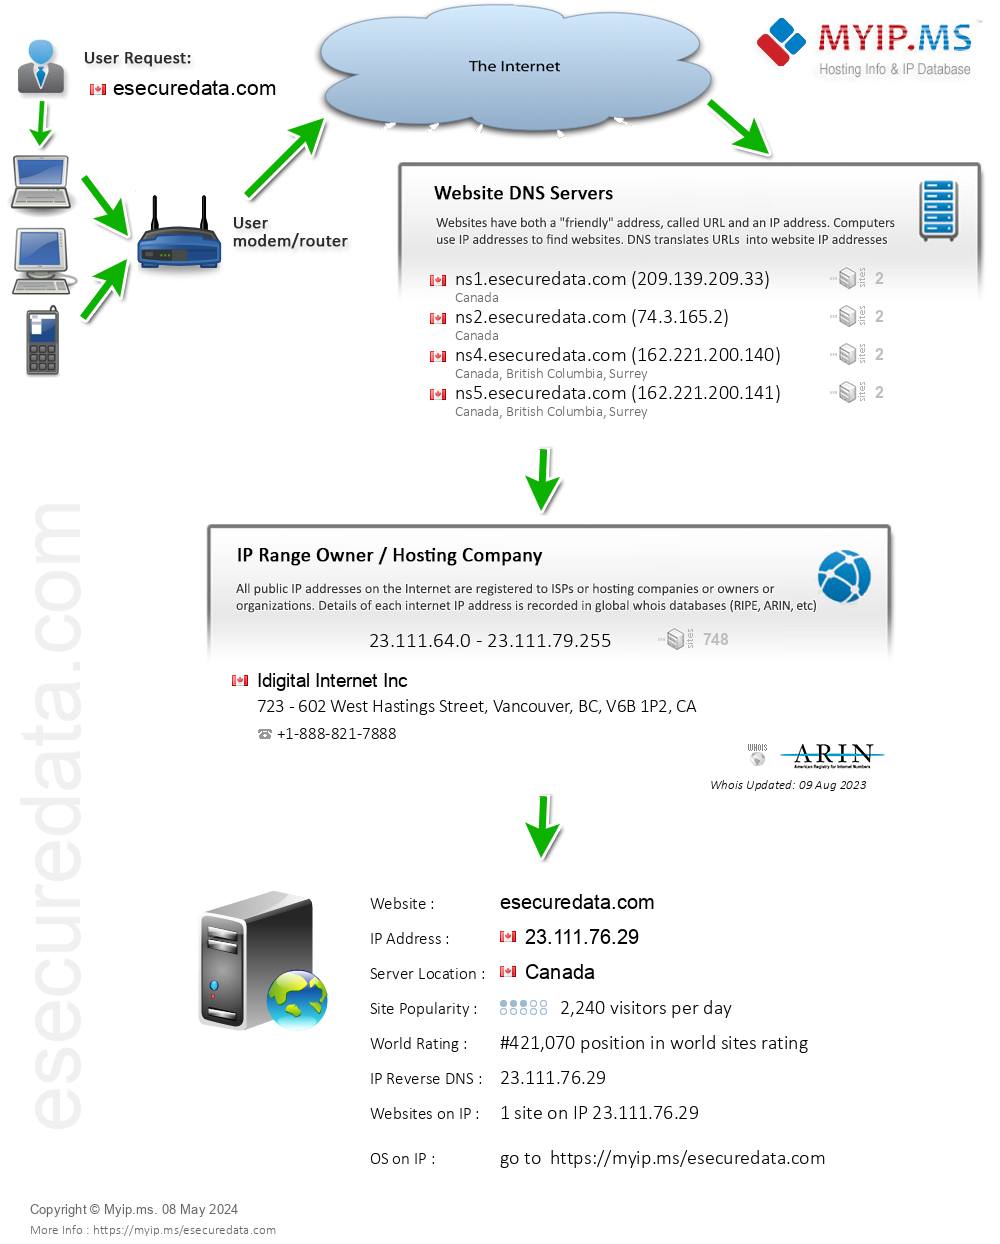 Esecuredata.com - Website Hosting Visual IP Diagram